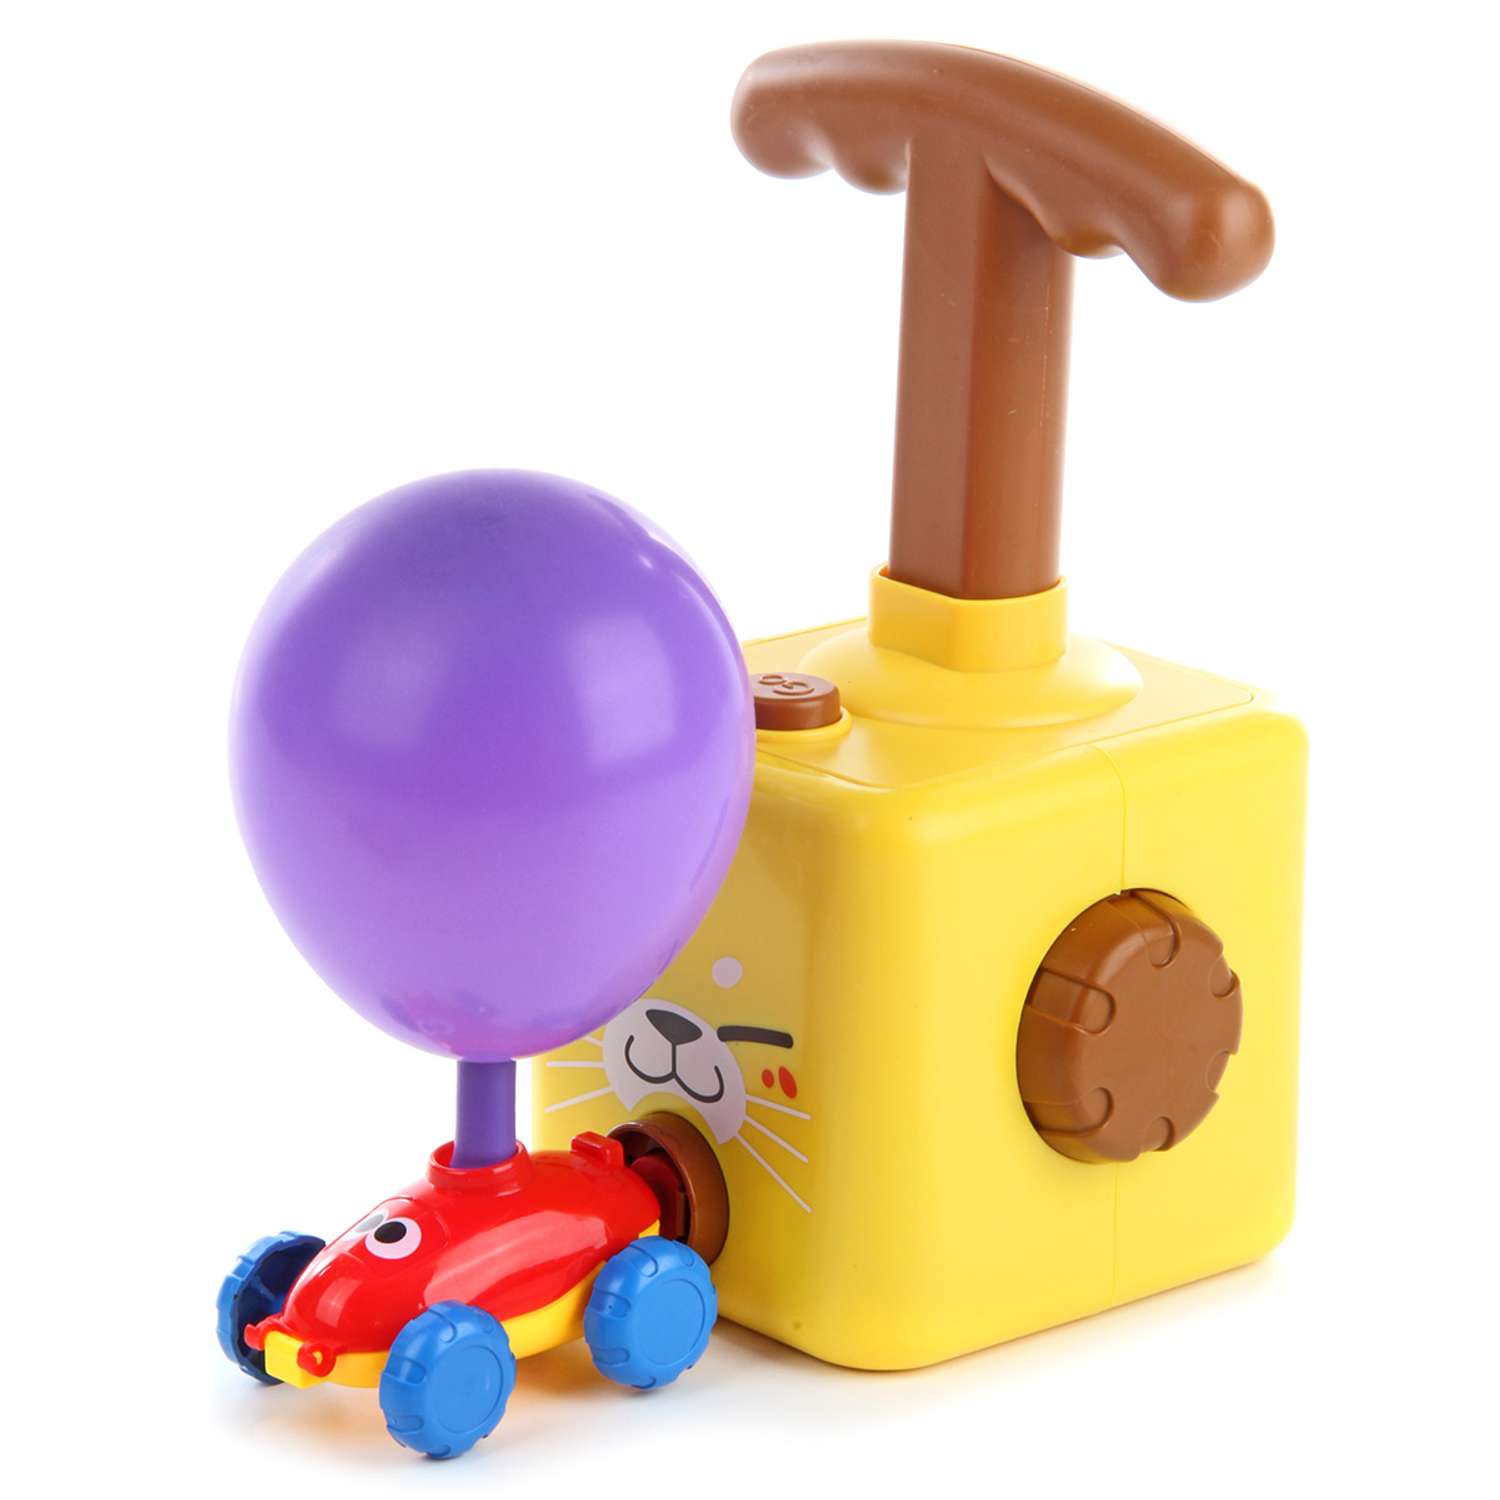 Машинка Ути Пути развивающая игрушка на воздушной тяге - фото 4